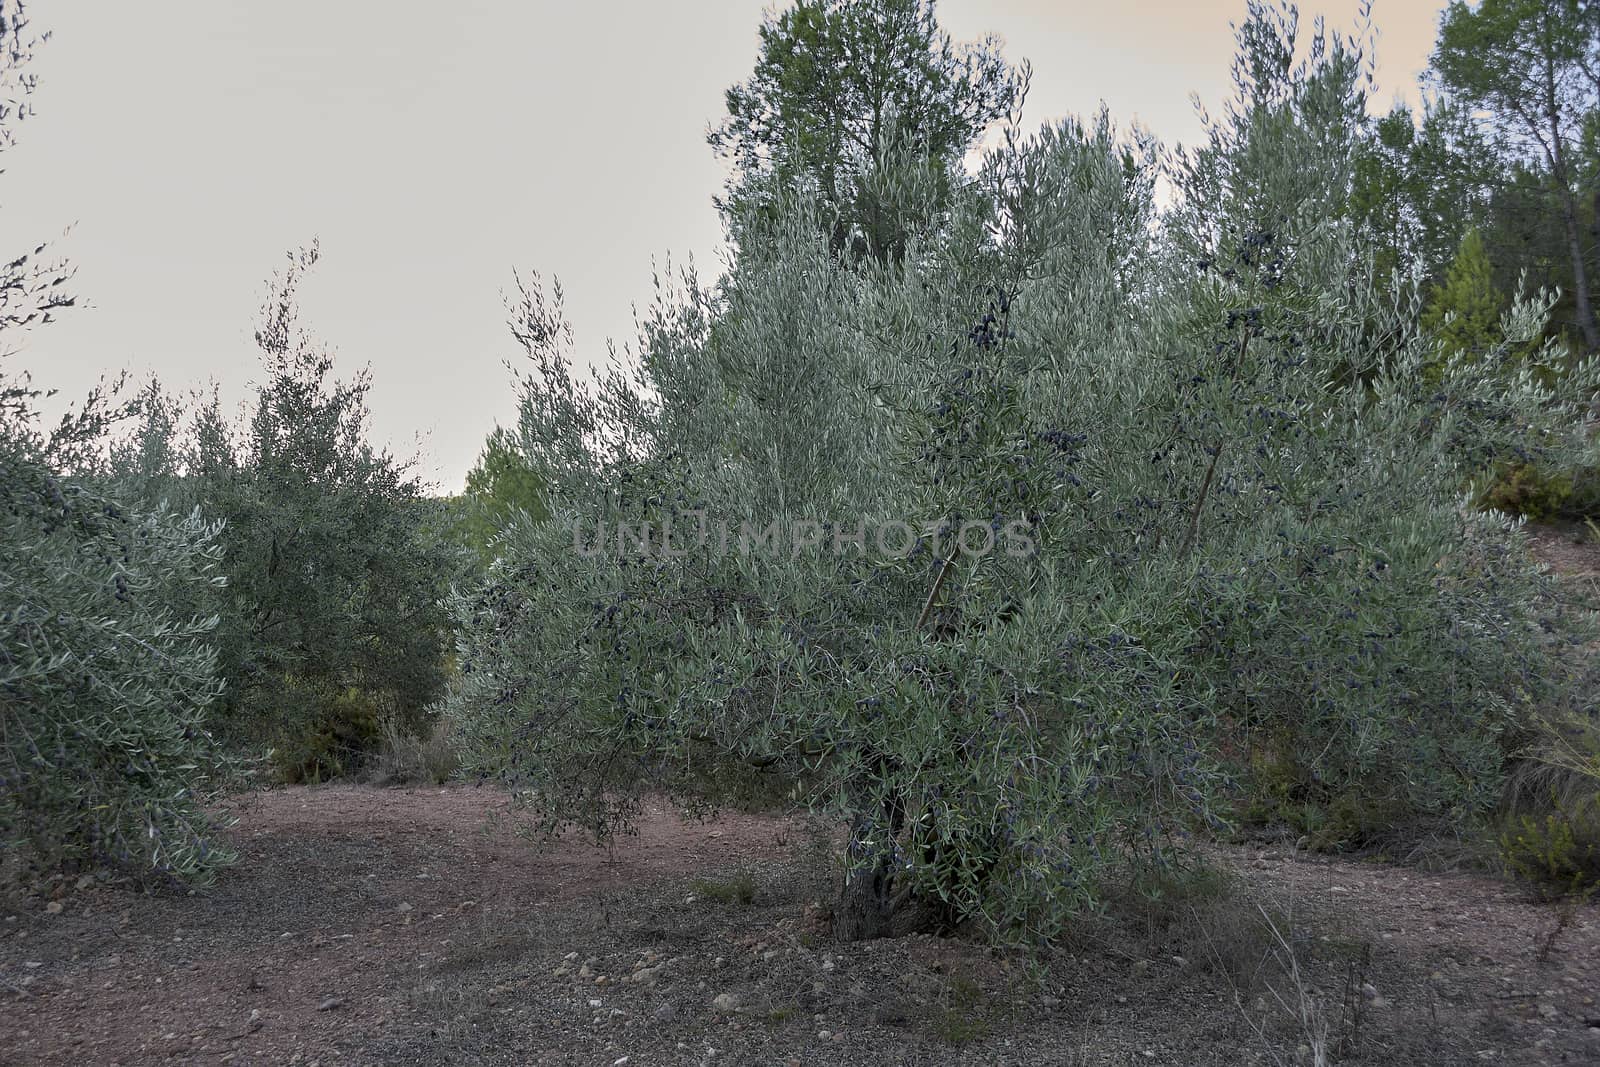 Olive fields full of olives for harvest, organic farming, centenary trees